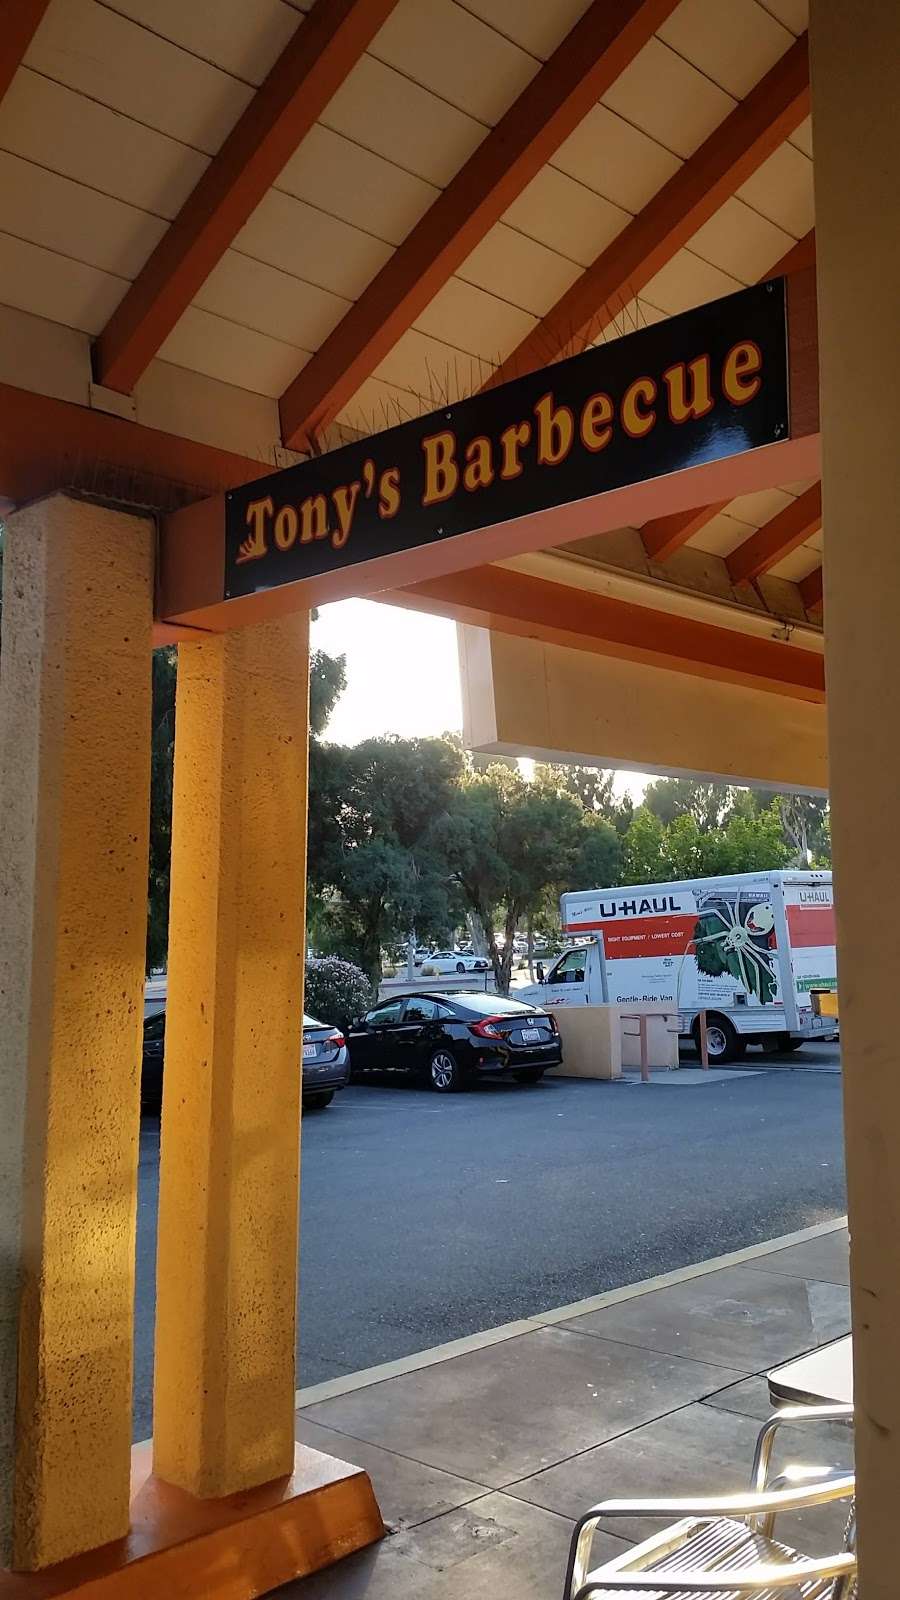 Tonys Barbecue And Bibingkinitan Of West Covina | 1555 East Amar Road #A, West Covina, CA 91792 | Phone: (626) 810-4988